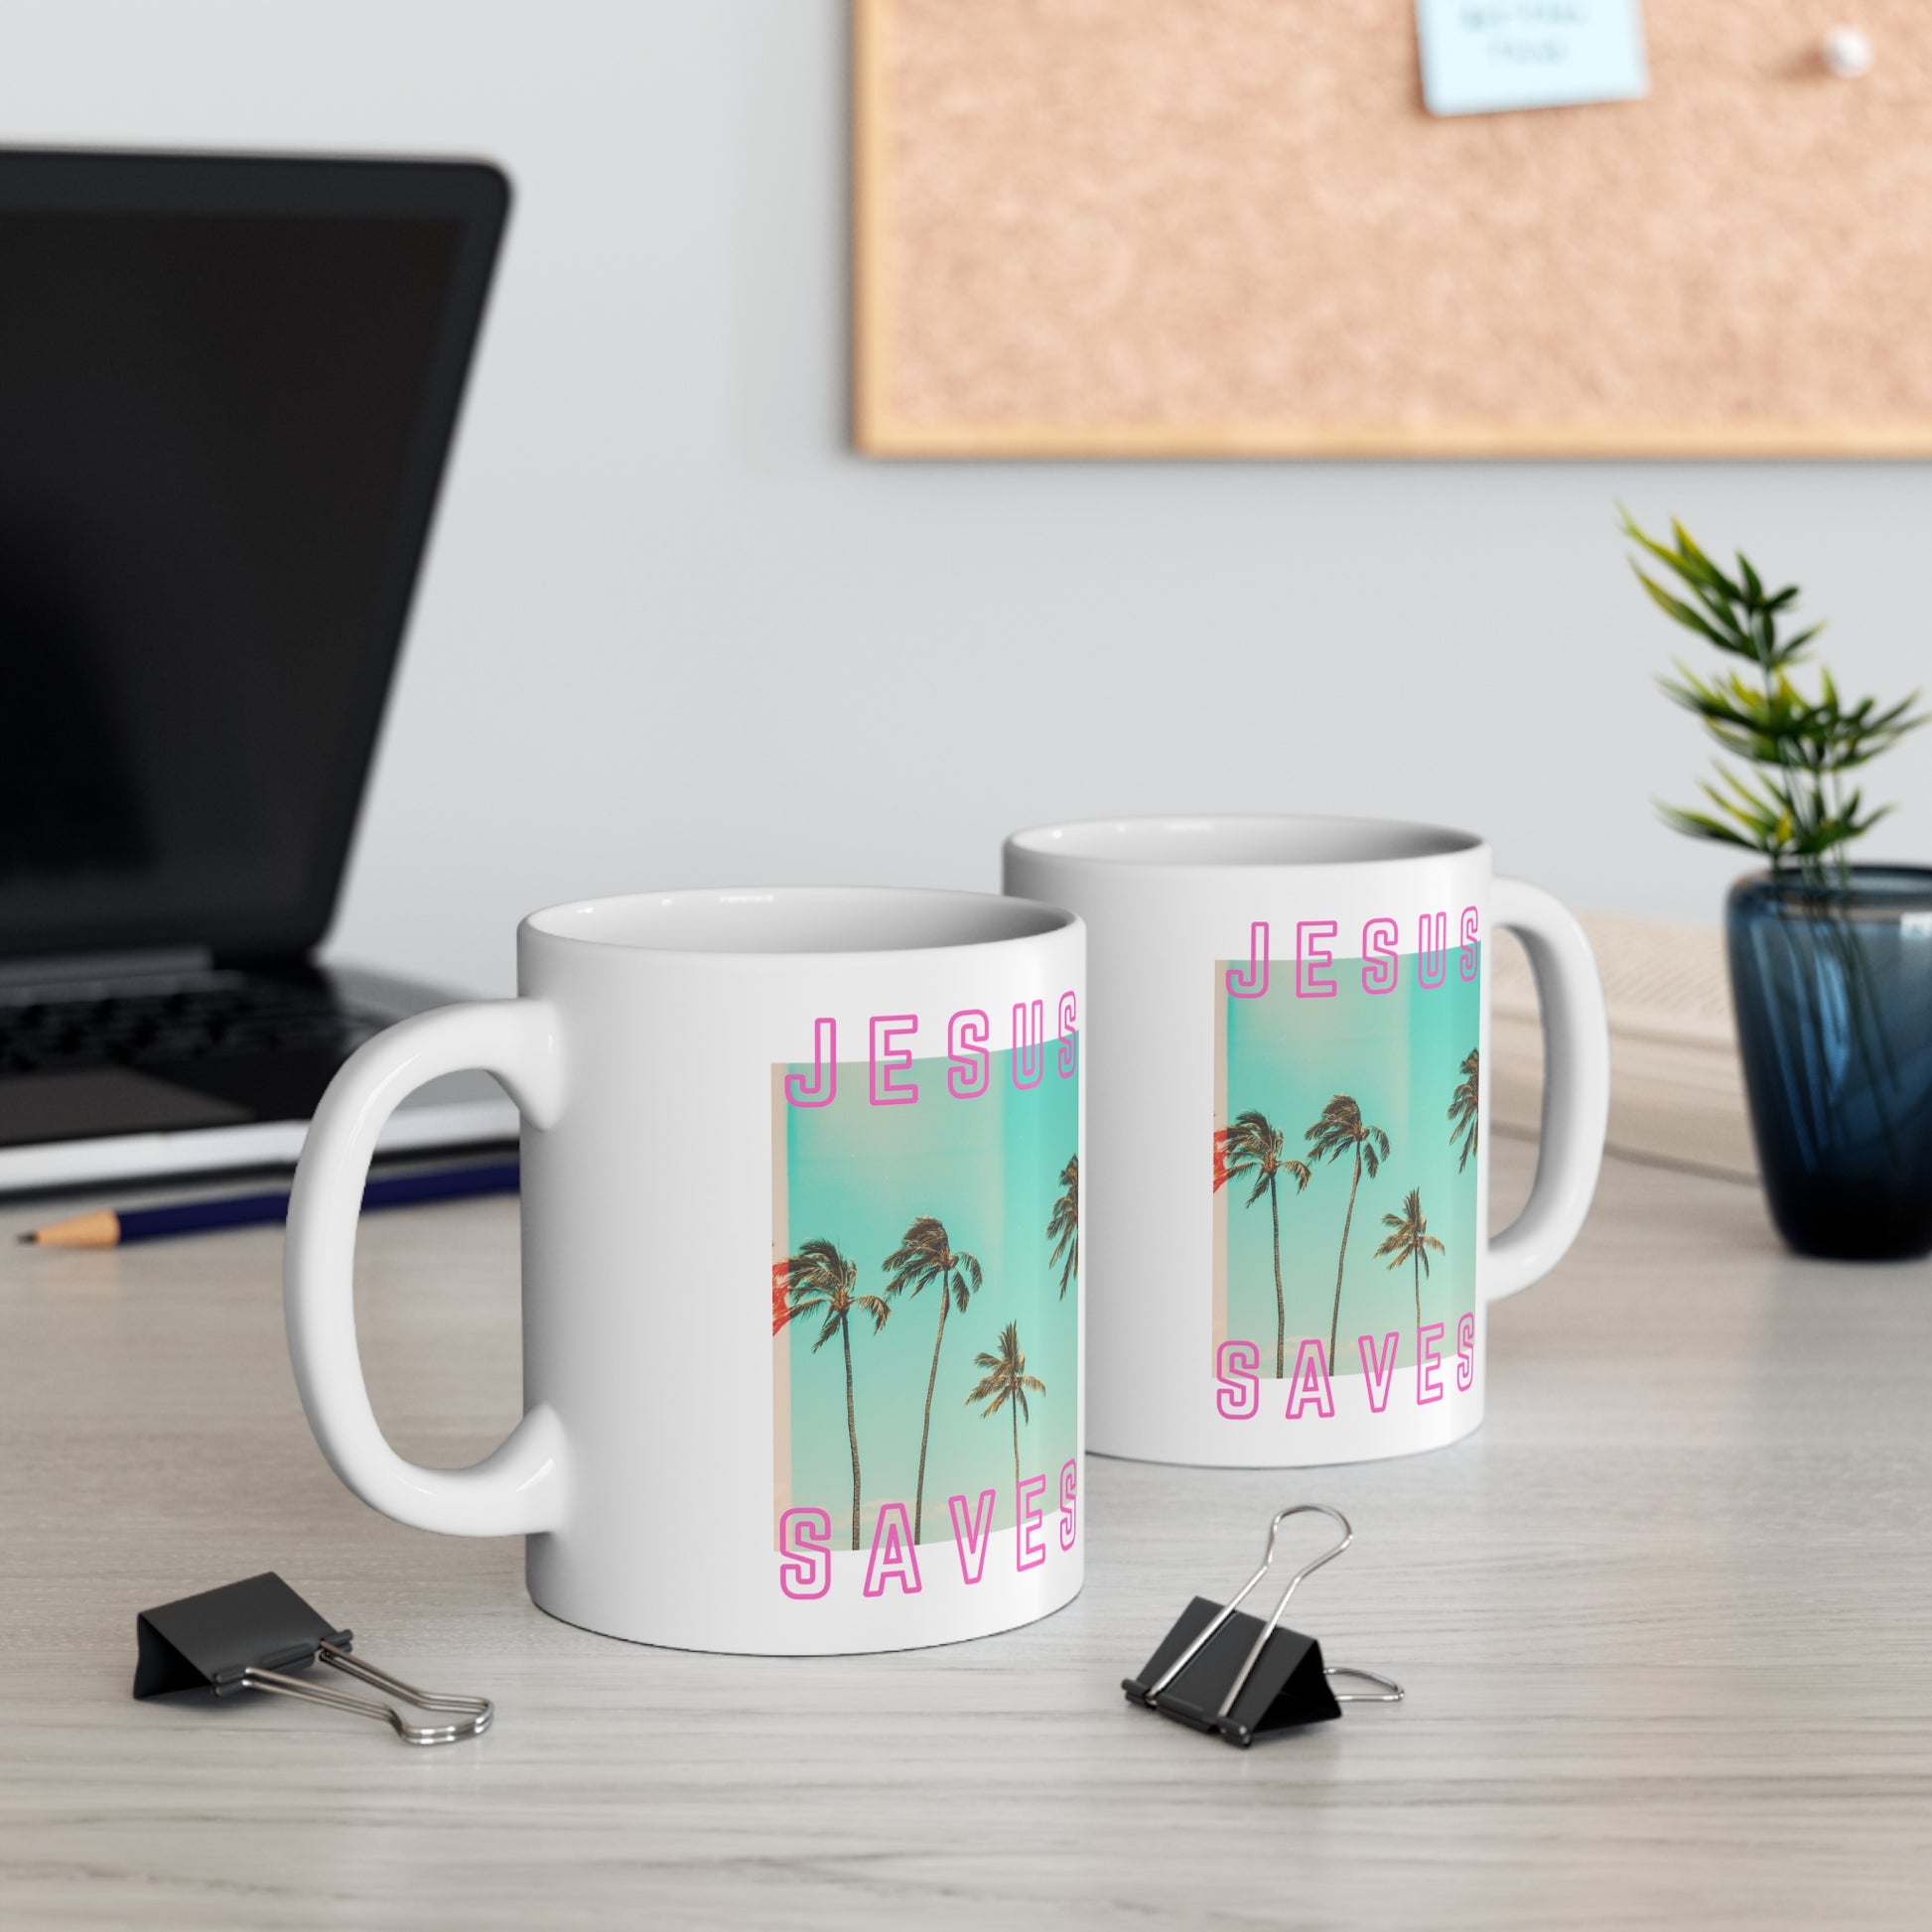 Jesus Saves Mug - Cali Jesus Saves LA Palm Tree Beach SoCal Mug with Handle on desk with laptop